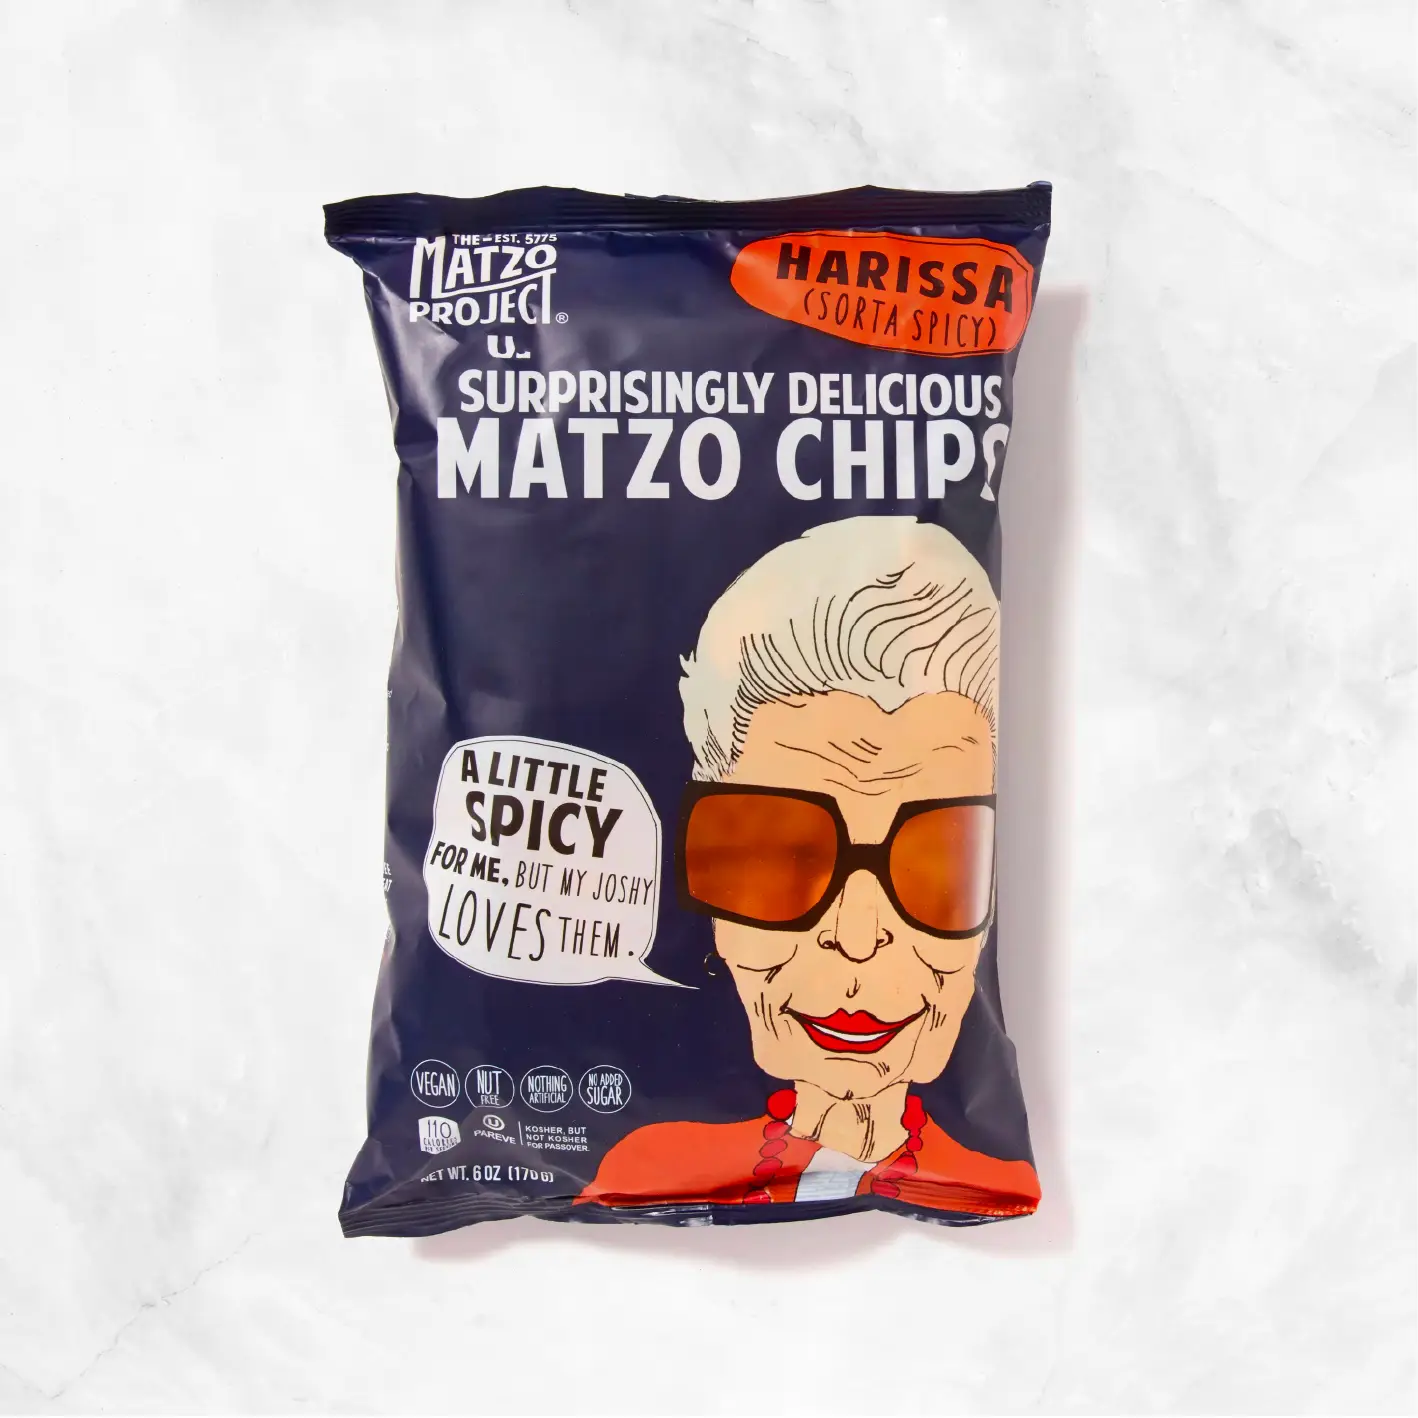 Harissa Matzo Chips Delivery